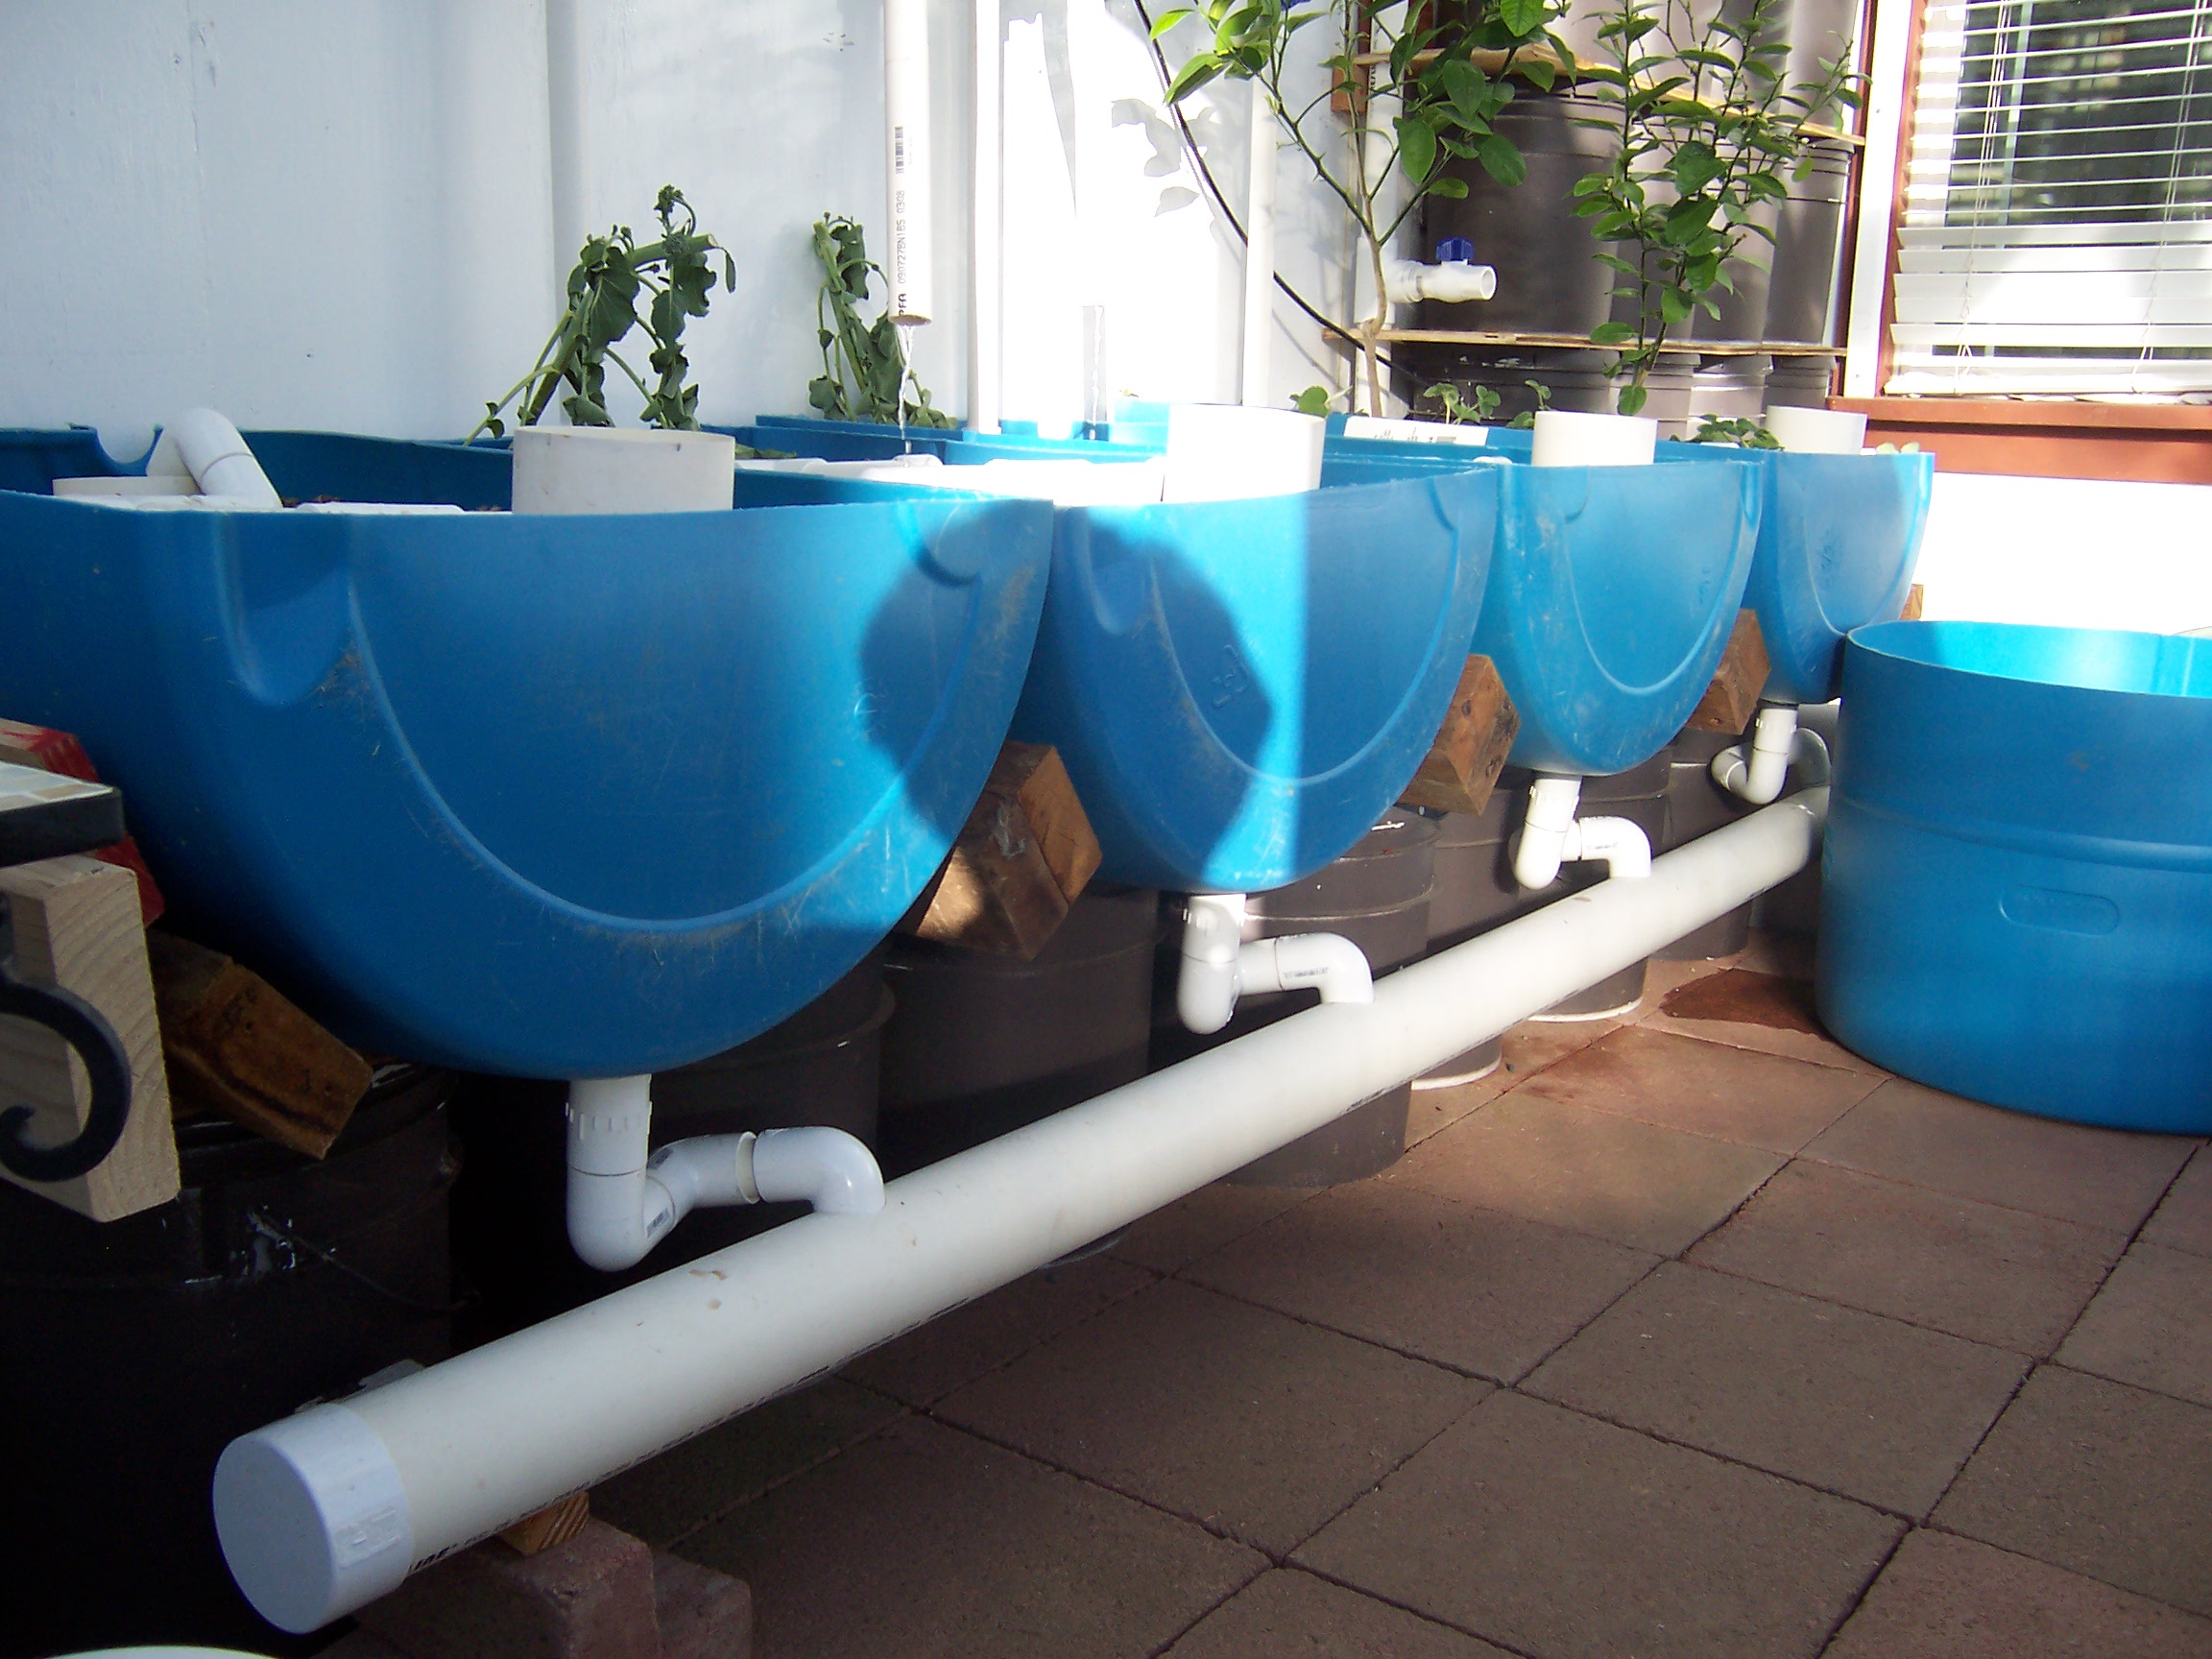 Aquaponics plumbing: Traps and drain pipe